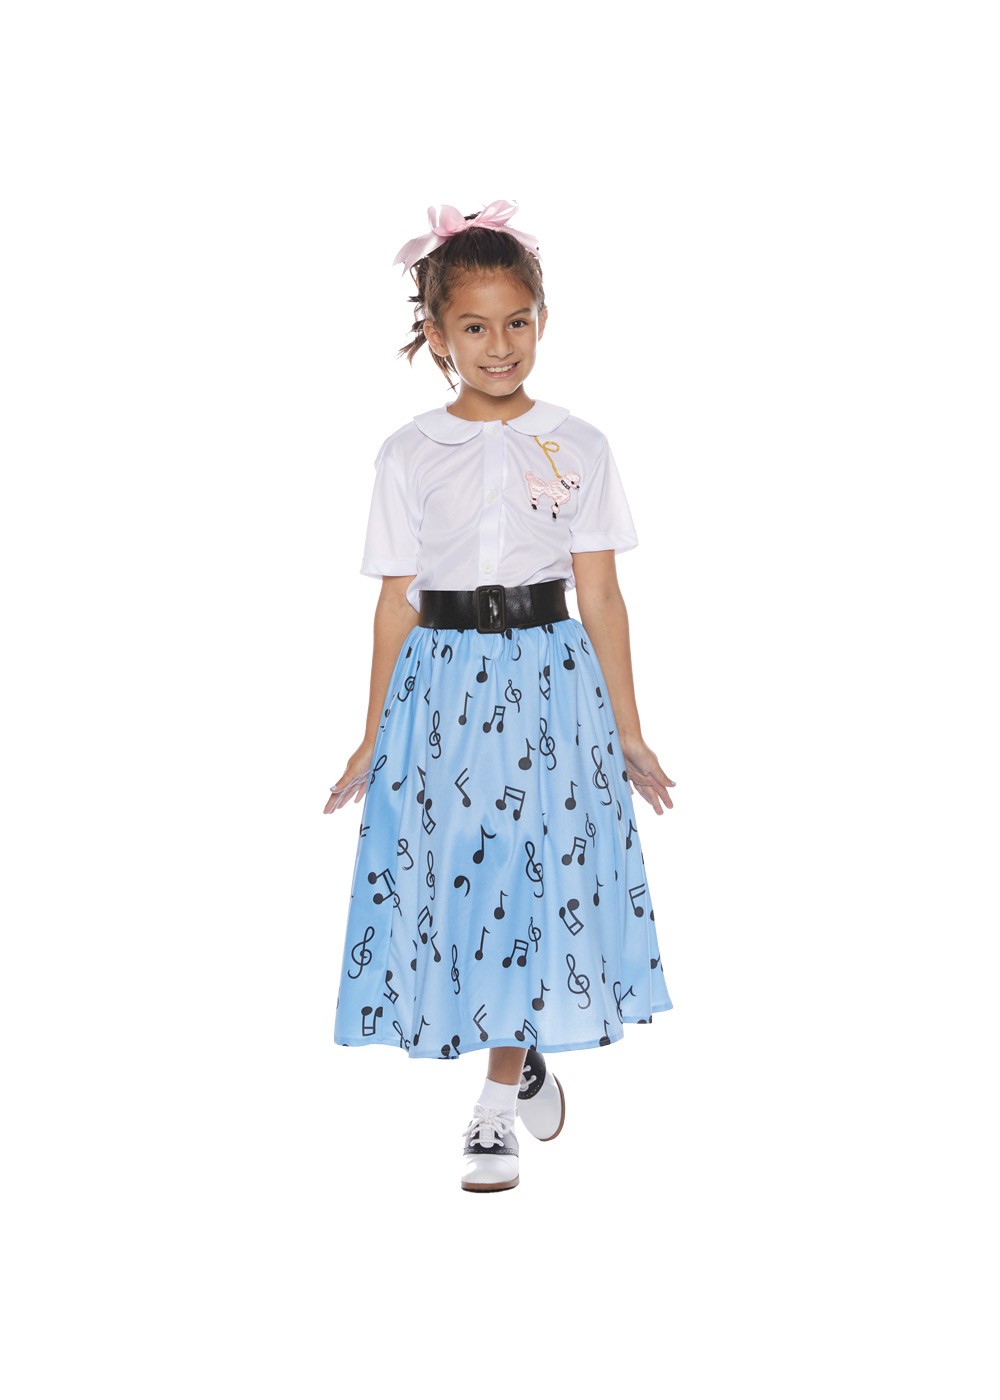 Kids 50's Poodle Skirt Girl Costume